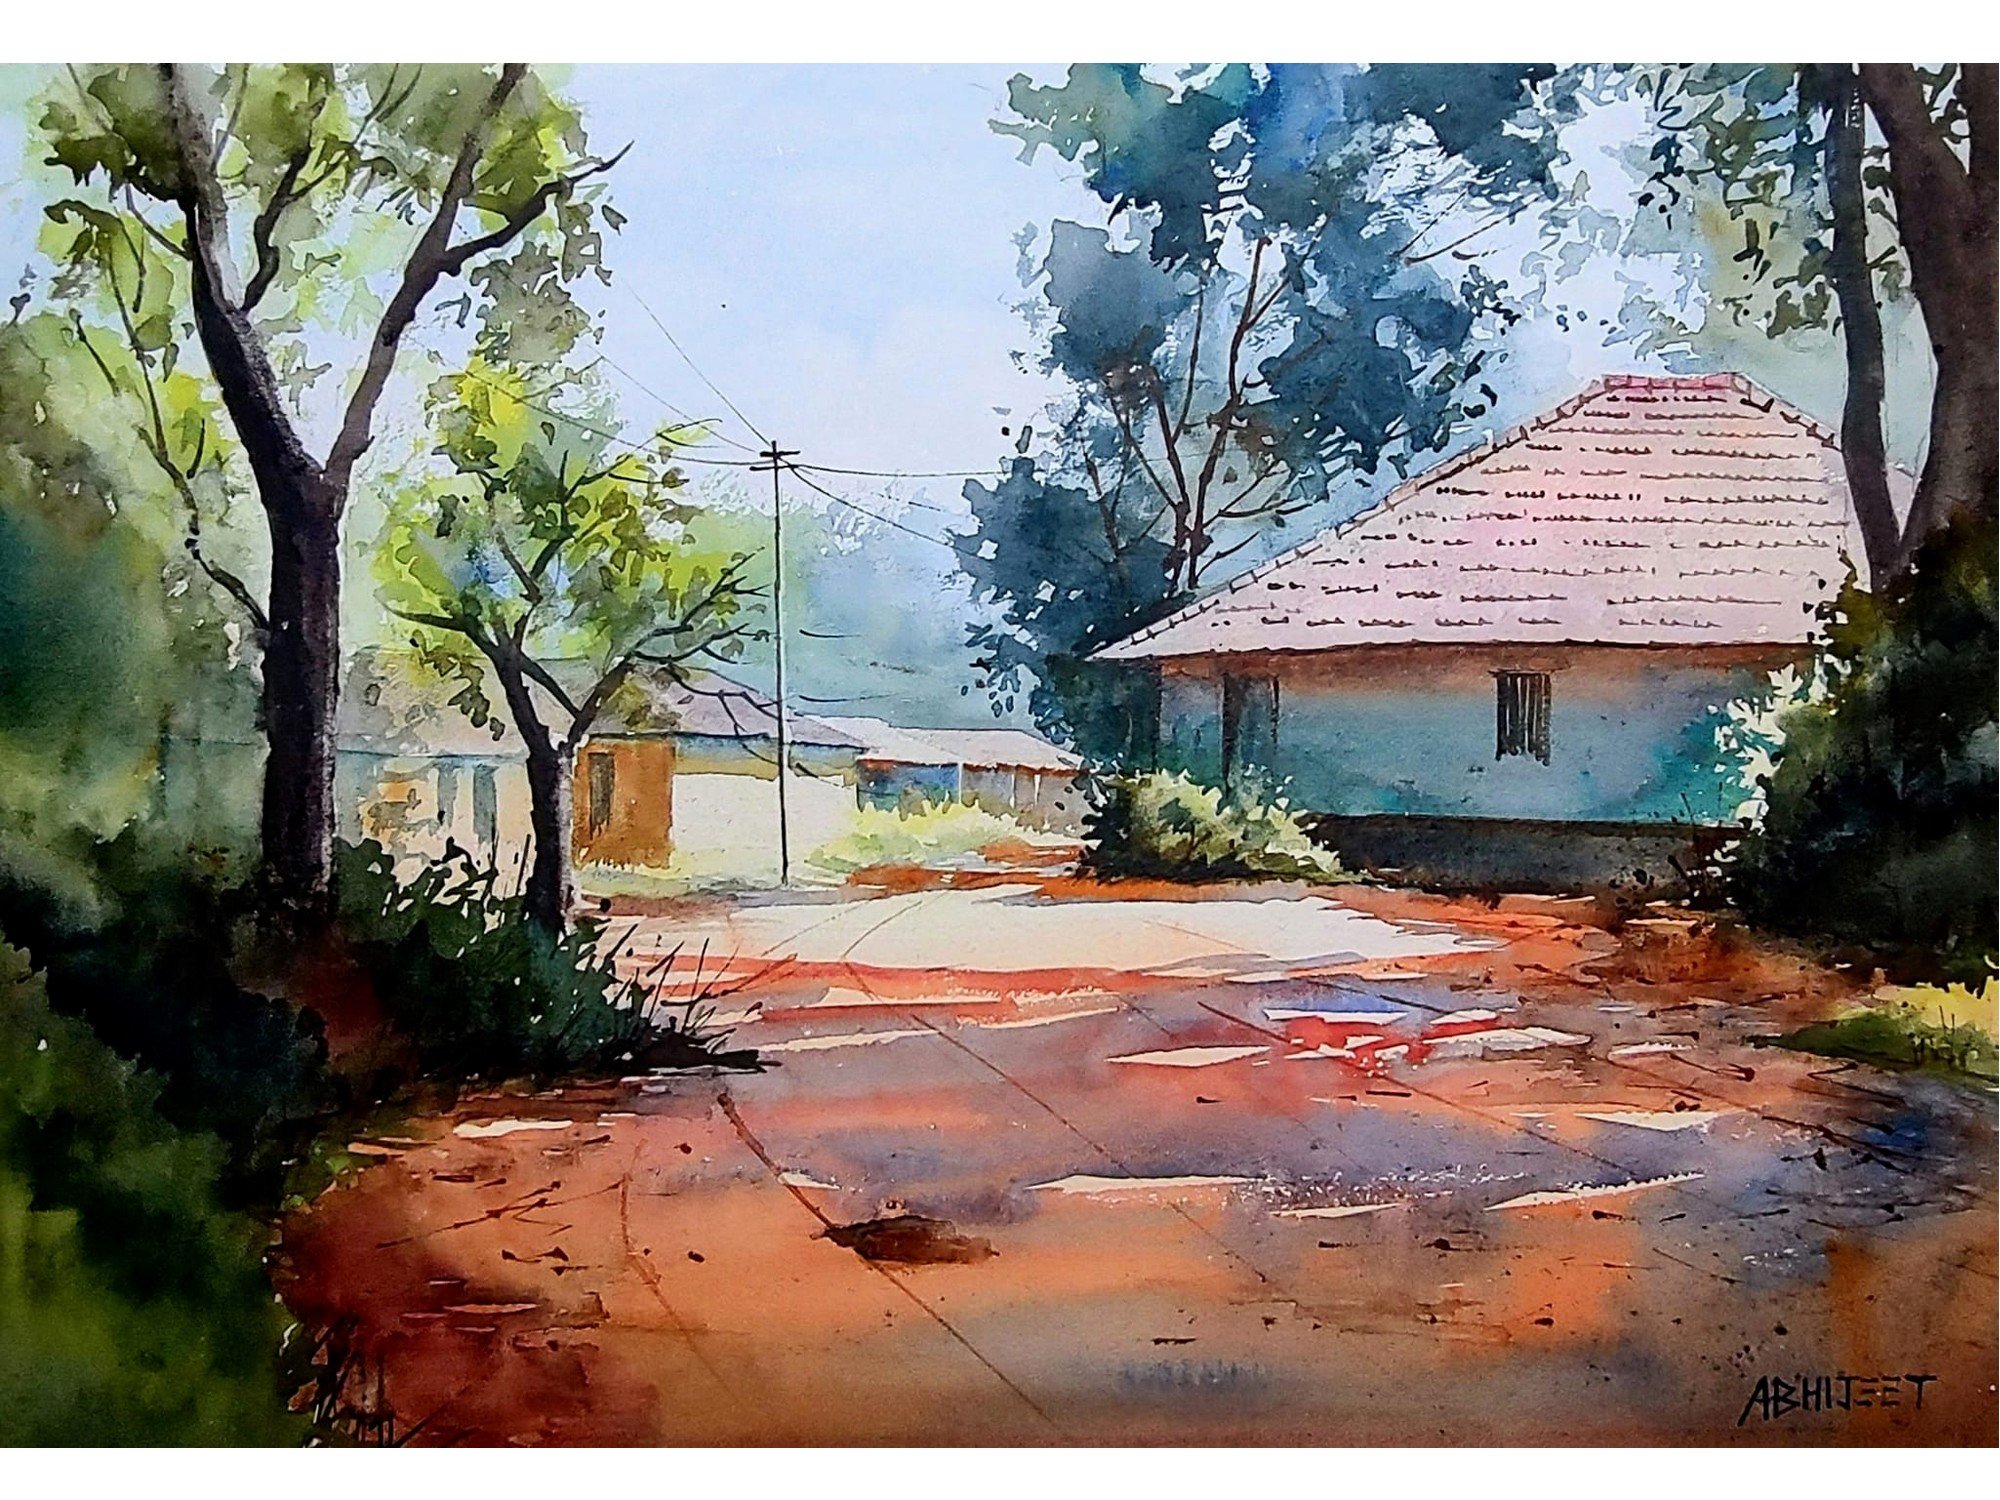 rural indian village watercolor painting images  Photoskart